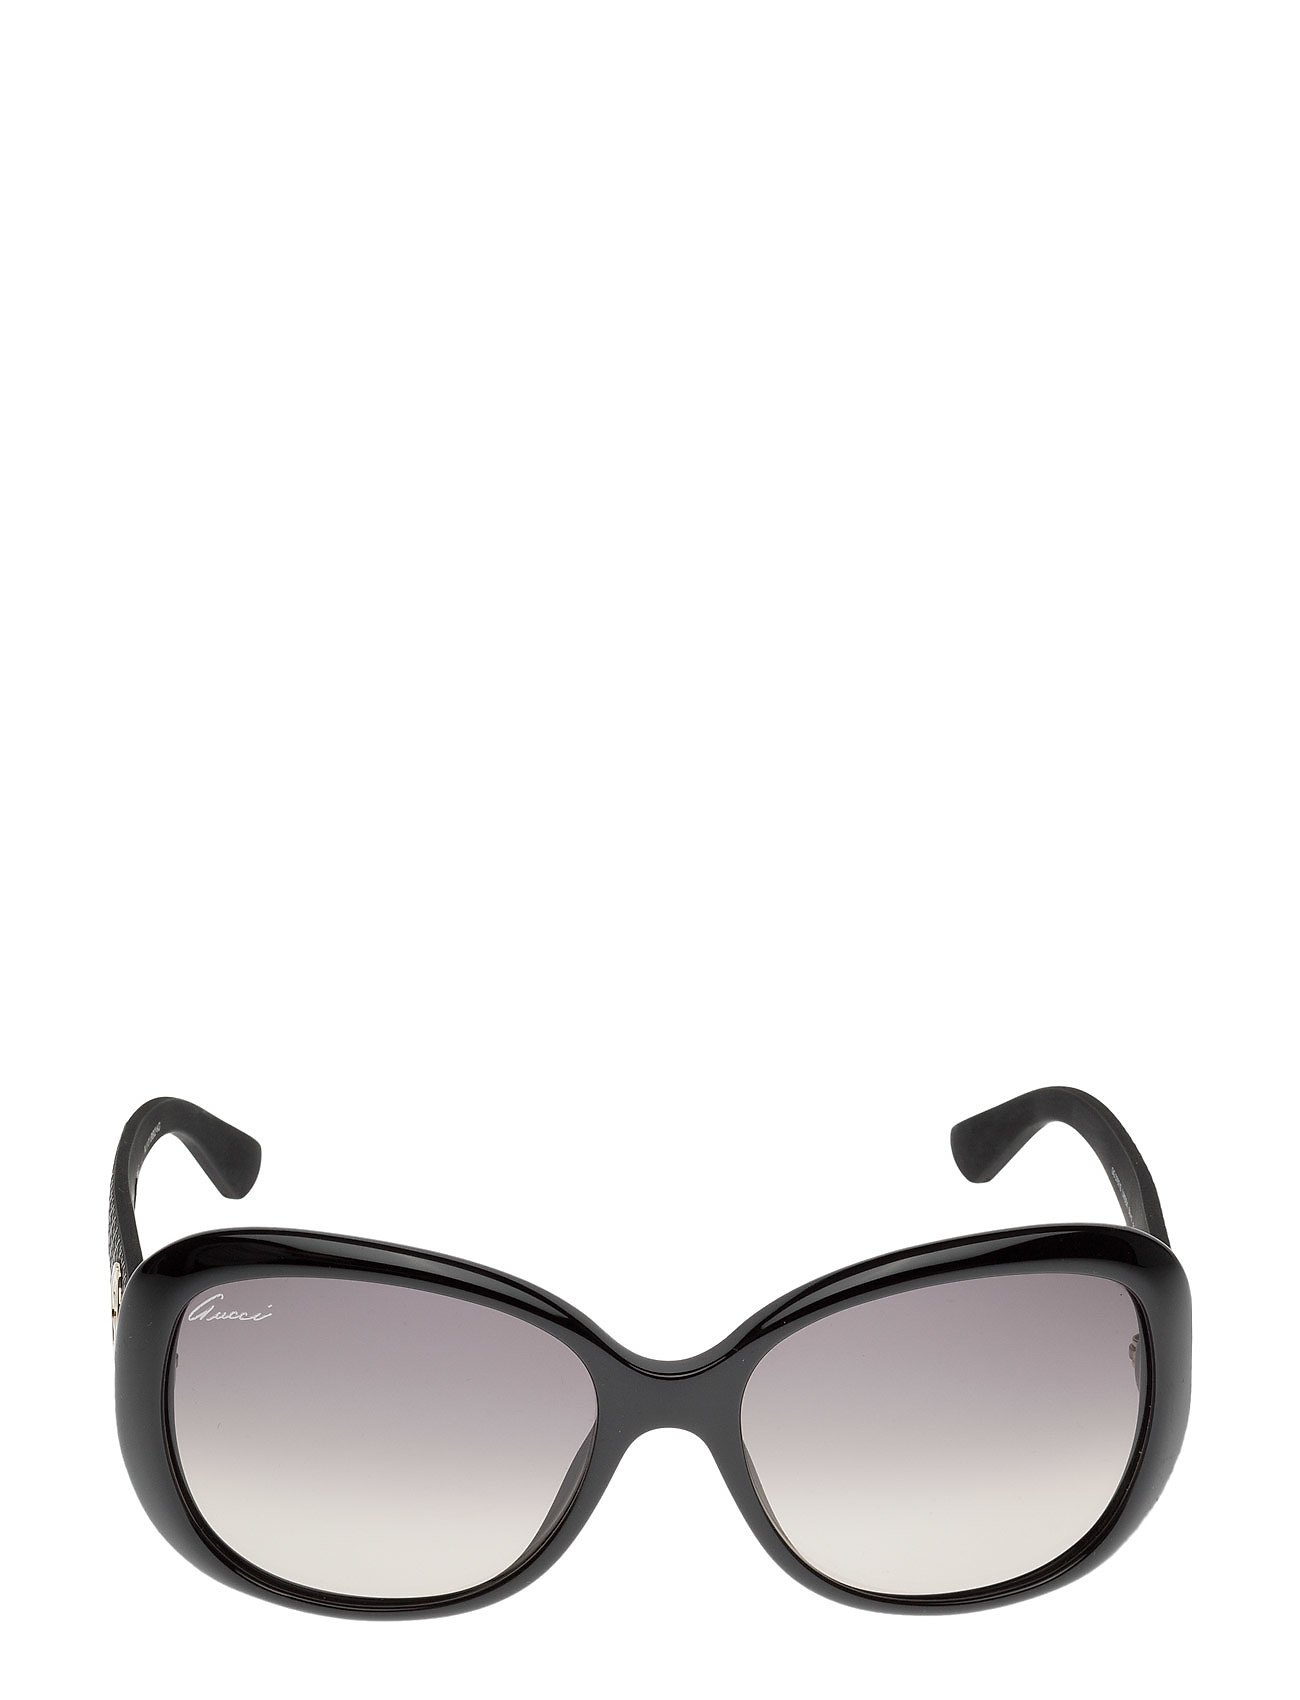 Cordelia Tilbageholde mikrobølgeovn Gucci Sunglasses Gg 3787/s - Firkantet stel - Boozt.com